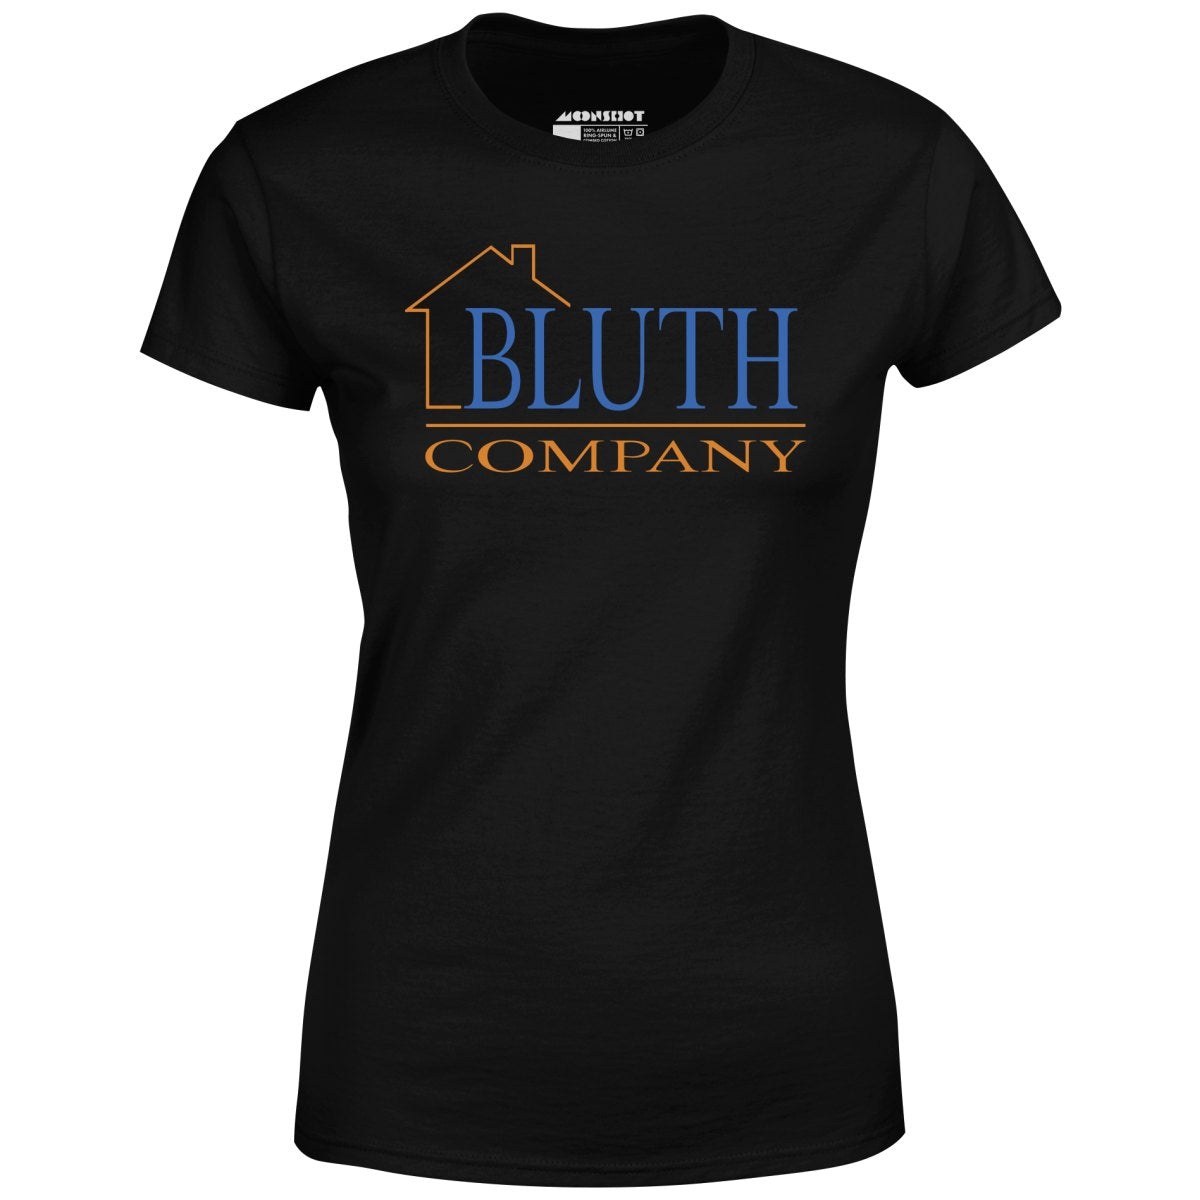 Bluth Company - Women's T-Shirt